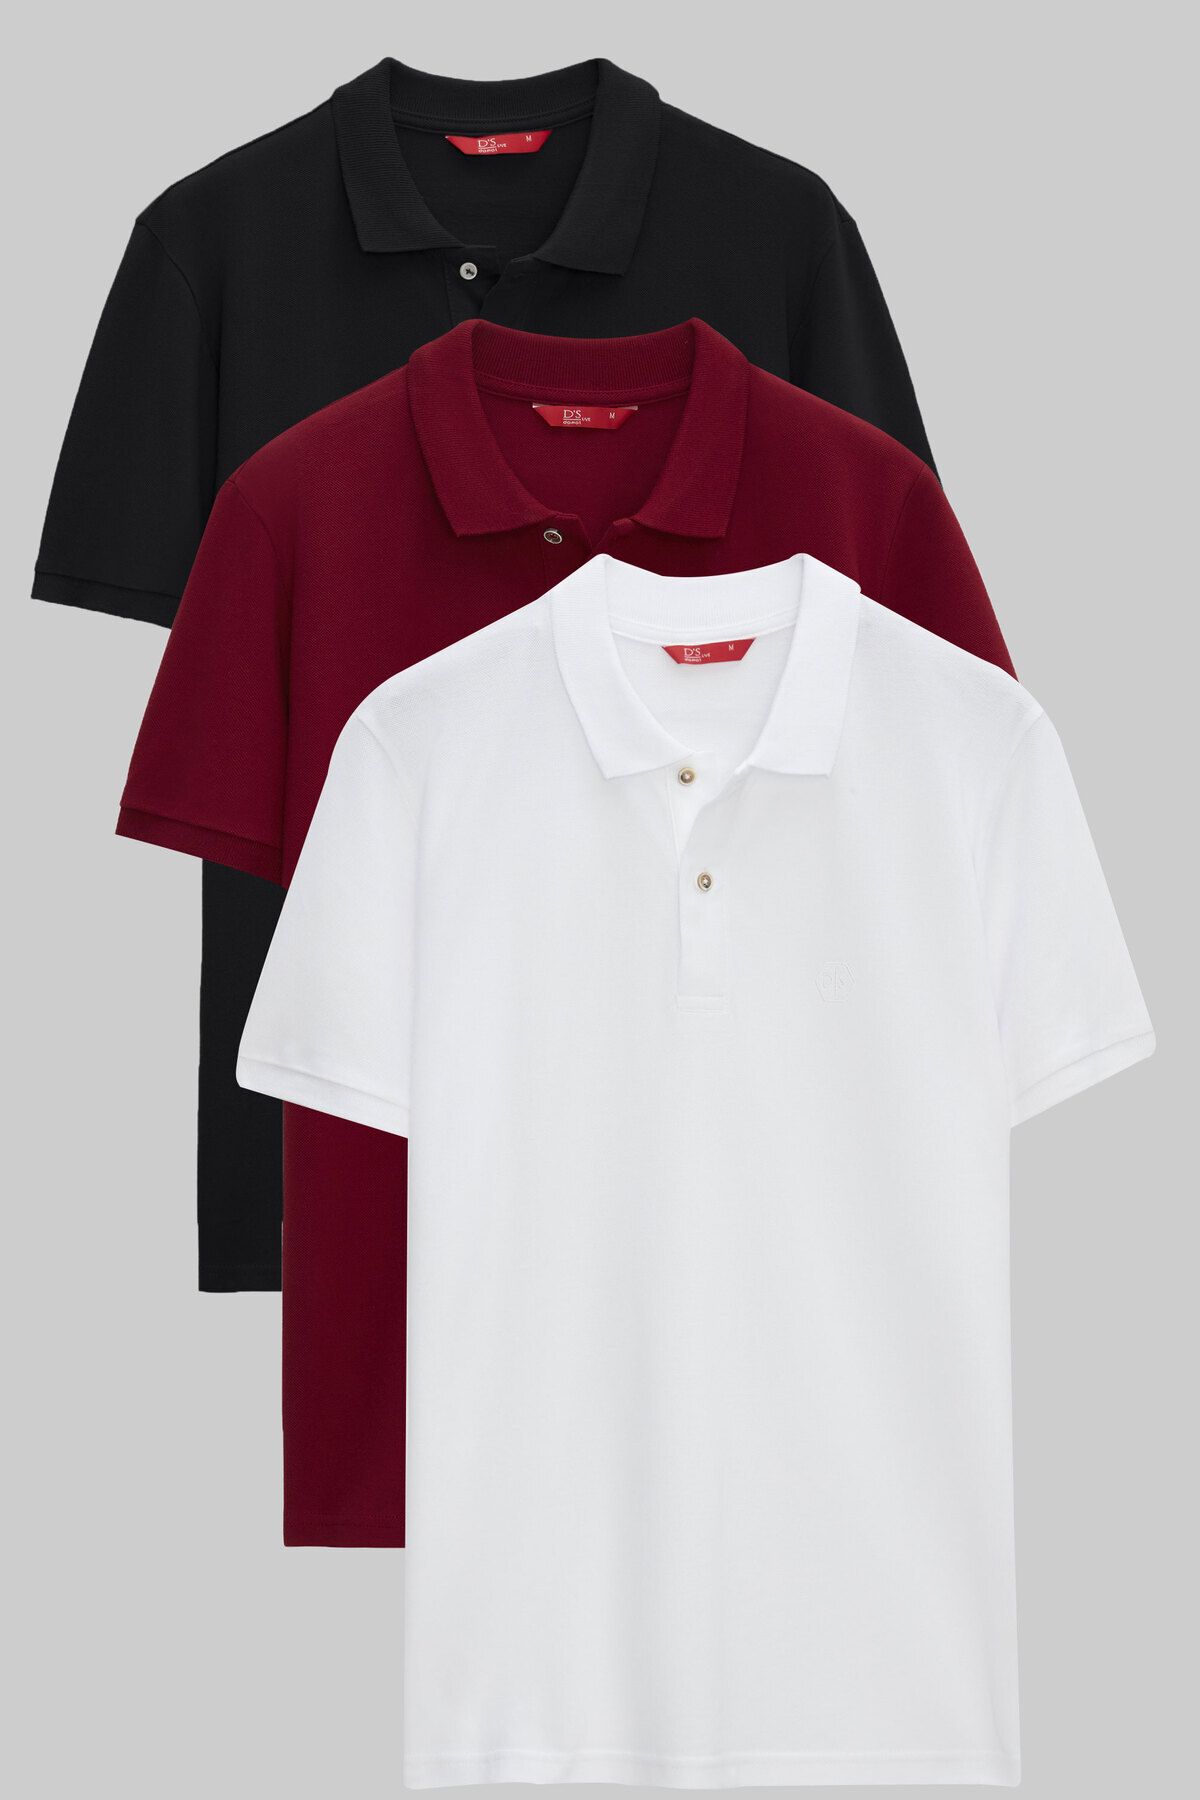 D'S Damat Regular Fit Siyah/bordo/beyaz Pike Dokulu %100 Pamuk Polo Yaka T-shirt